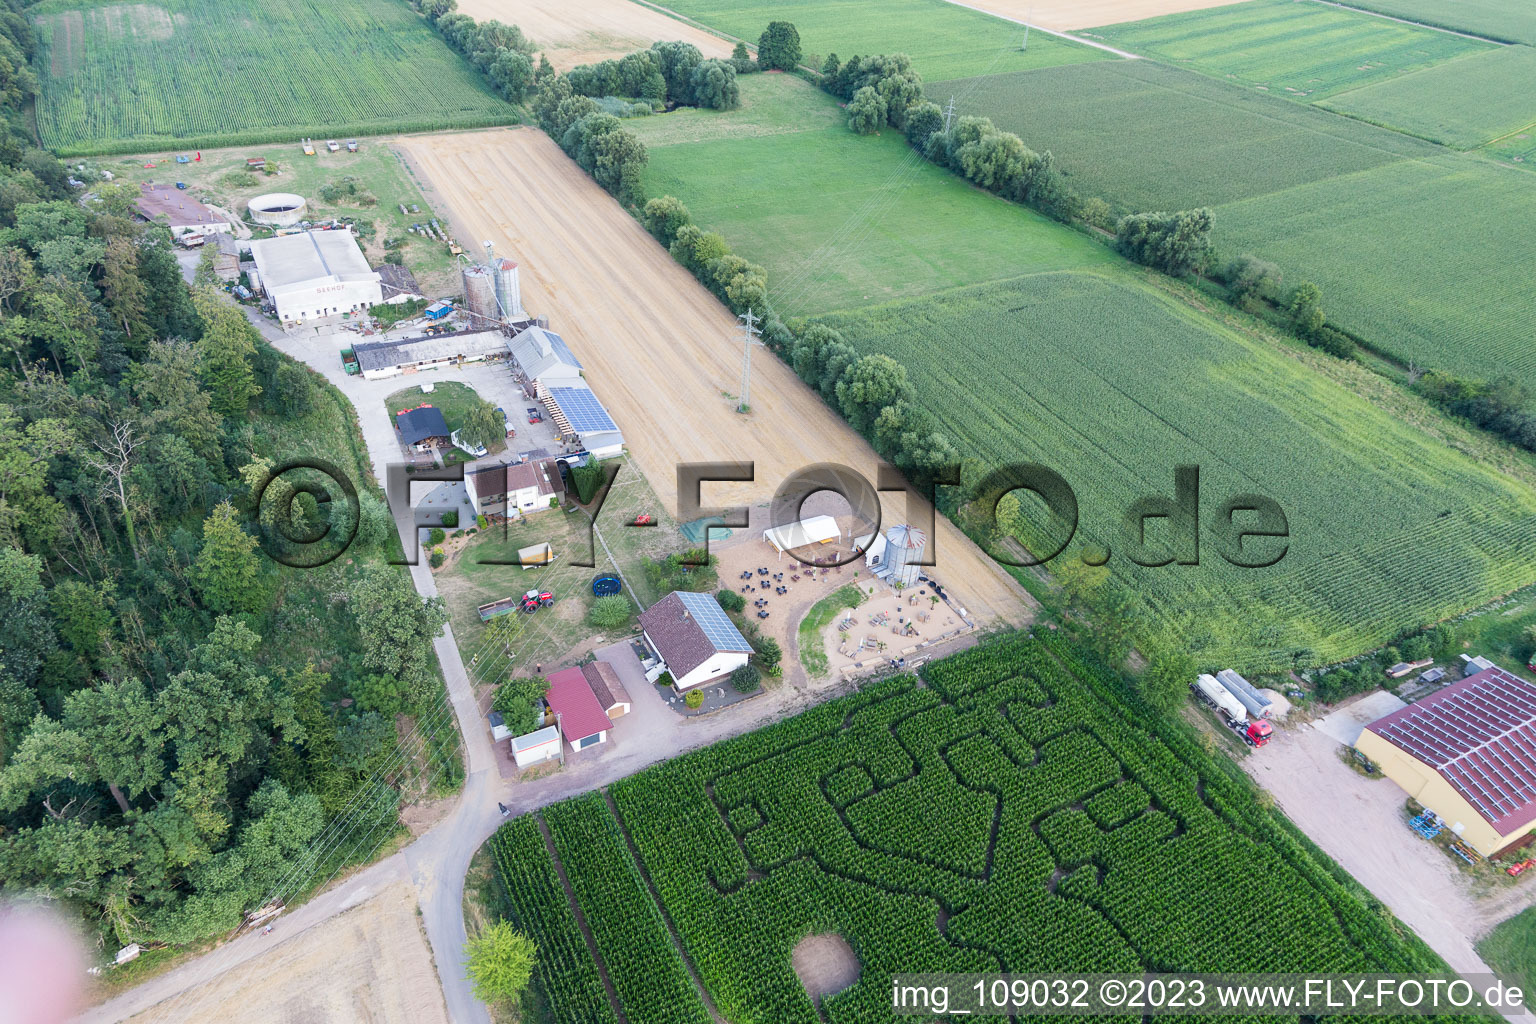 Bird's eye view of Corn maze at Seehof in Steinweiler in the state Rhineland-Palatinate, Germany